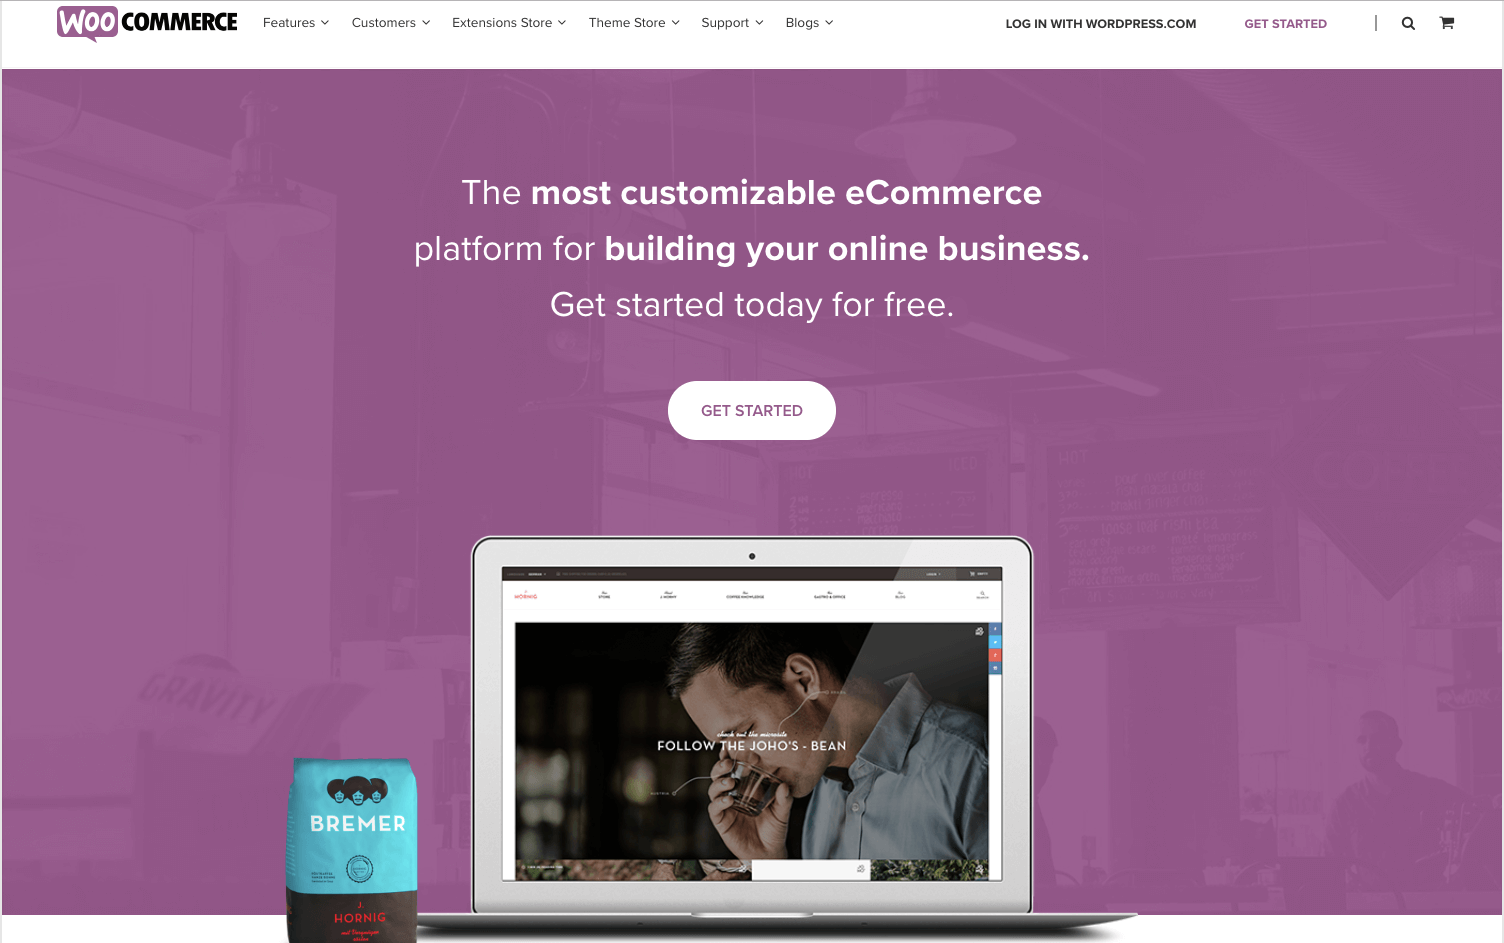 woocommerce-ecommerce-platform